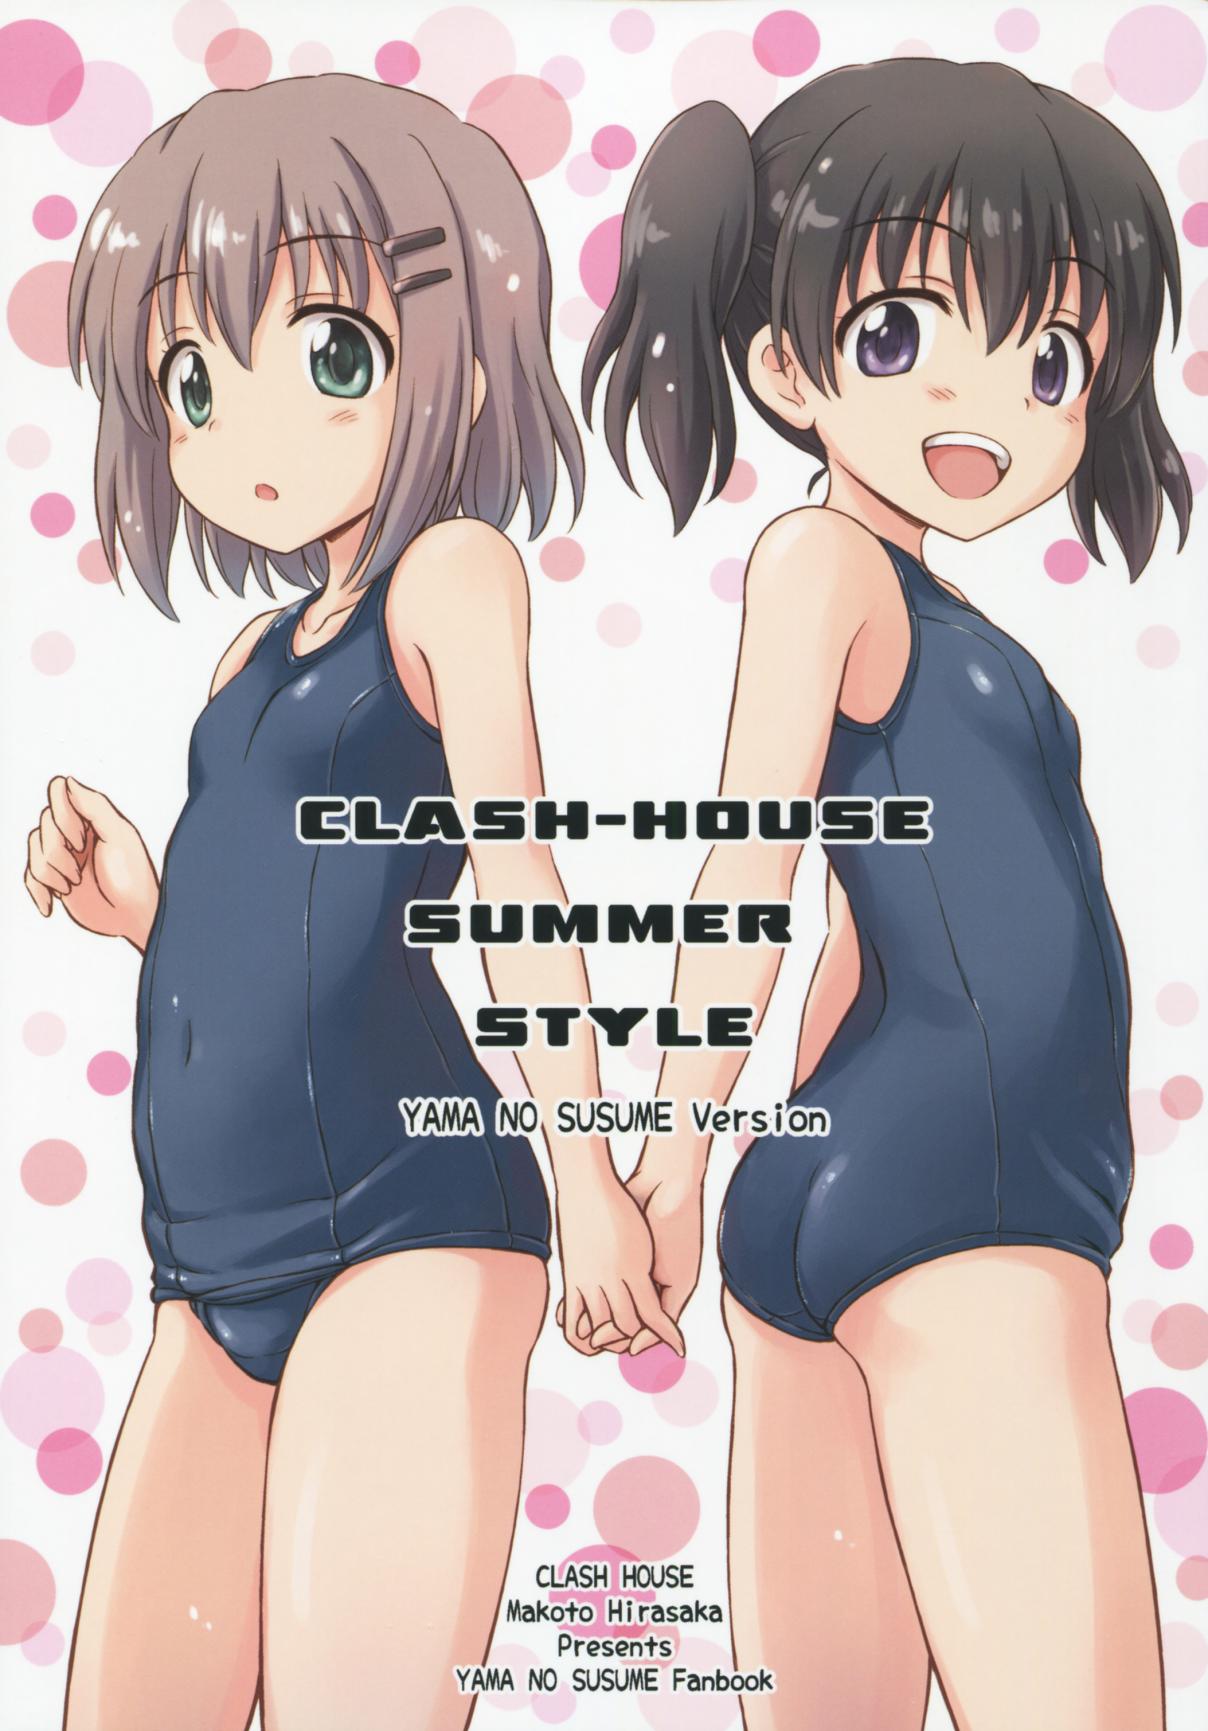 Yama no Susume Clash House Summer Style (Doujinshi) Oneshot